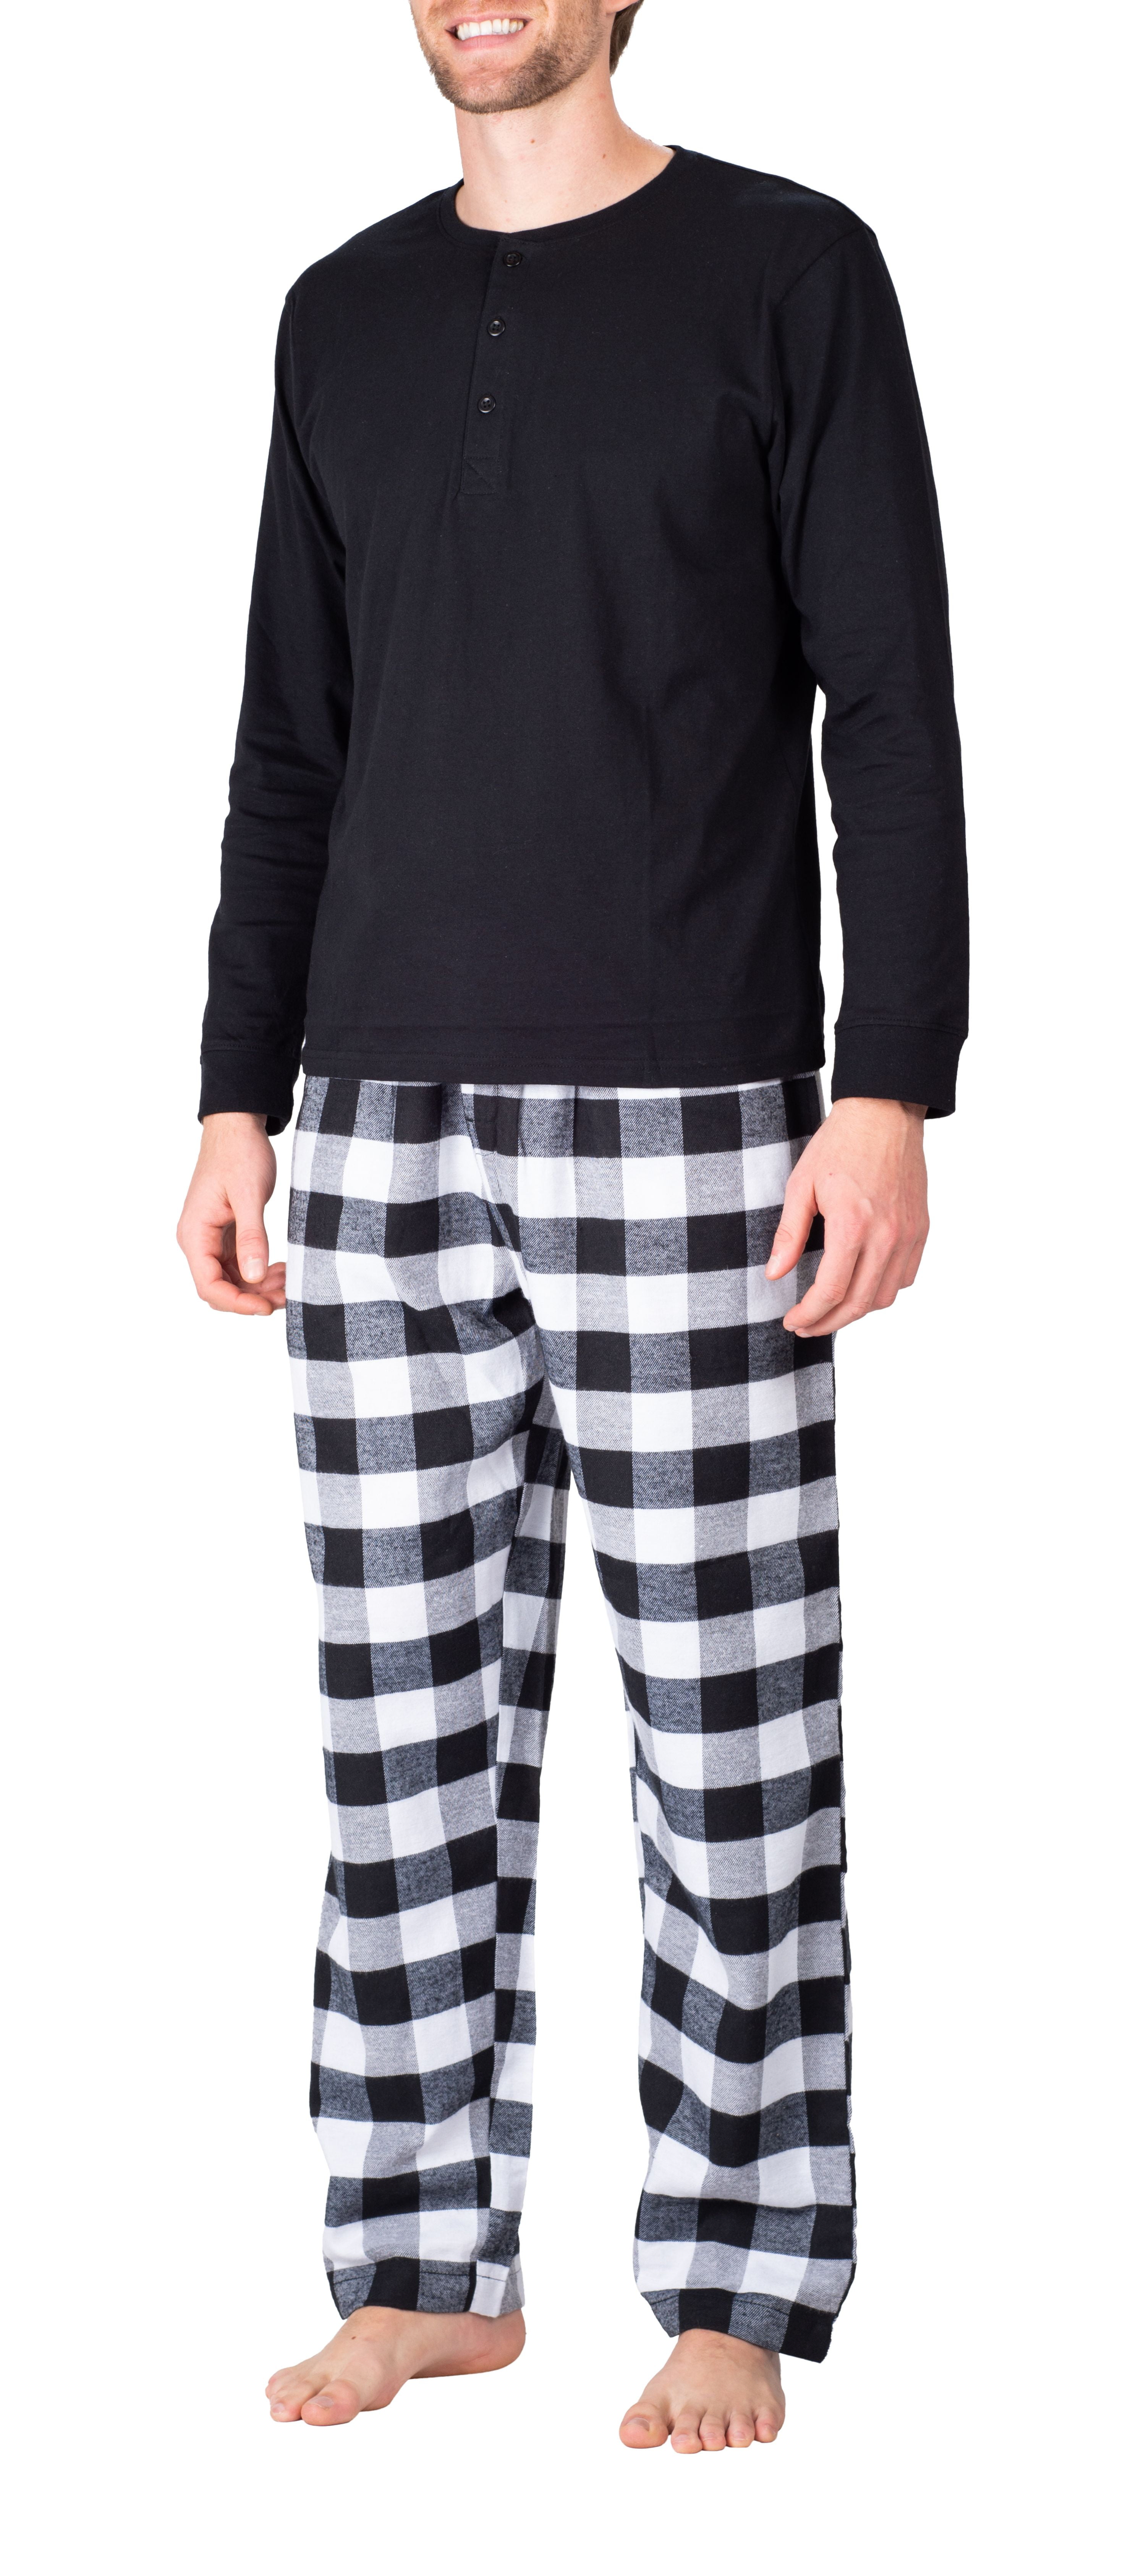 Mens Pajamas Set 100% Cotton Sleepwear Short Sleeve Check T-Shirt TOP &  Bottoms